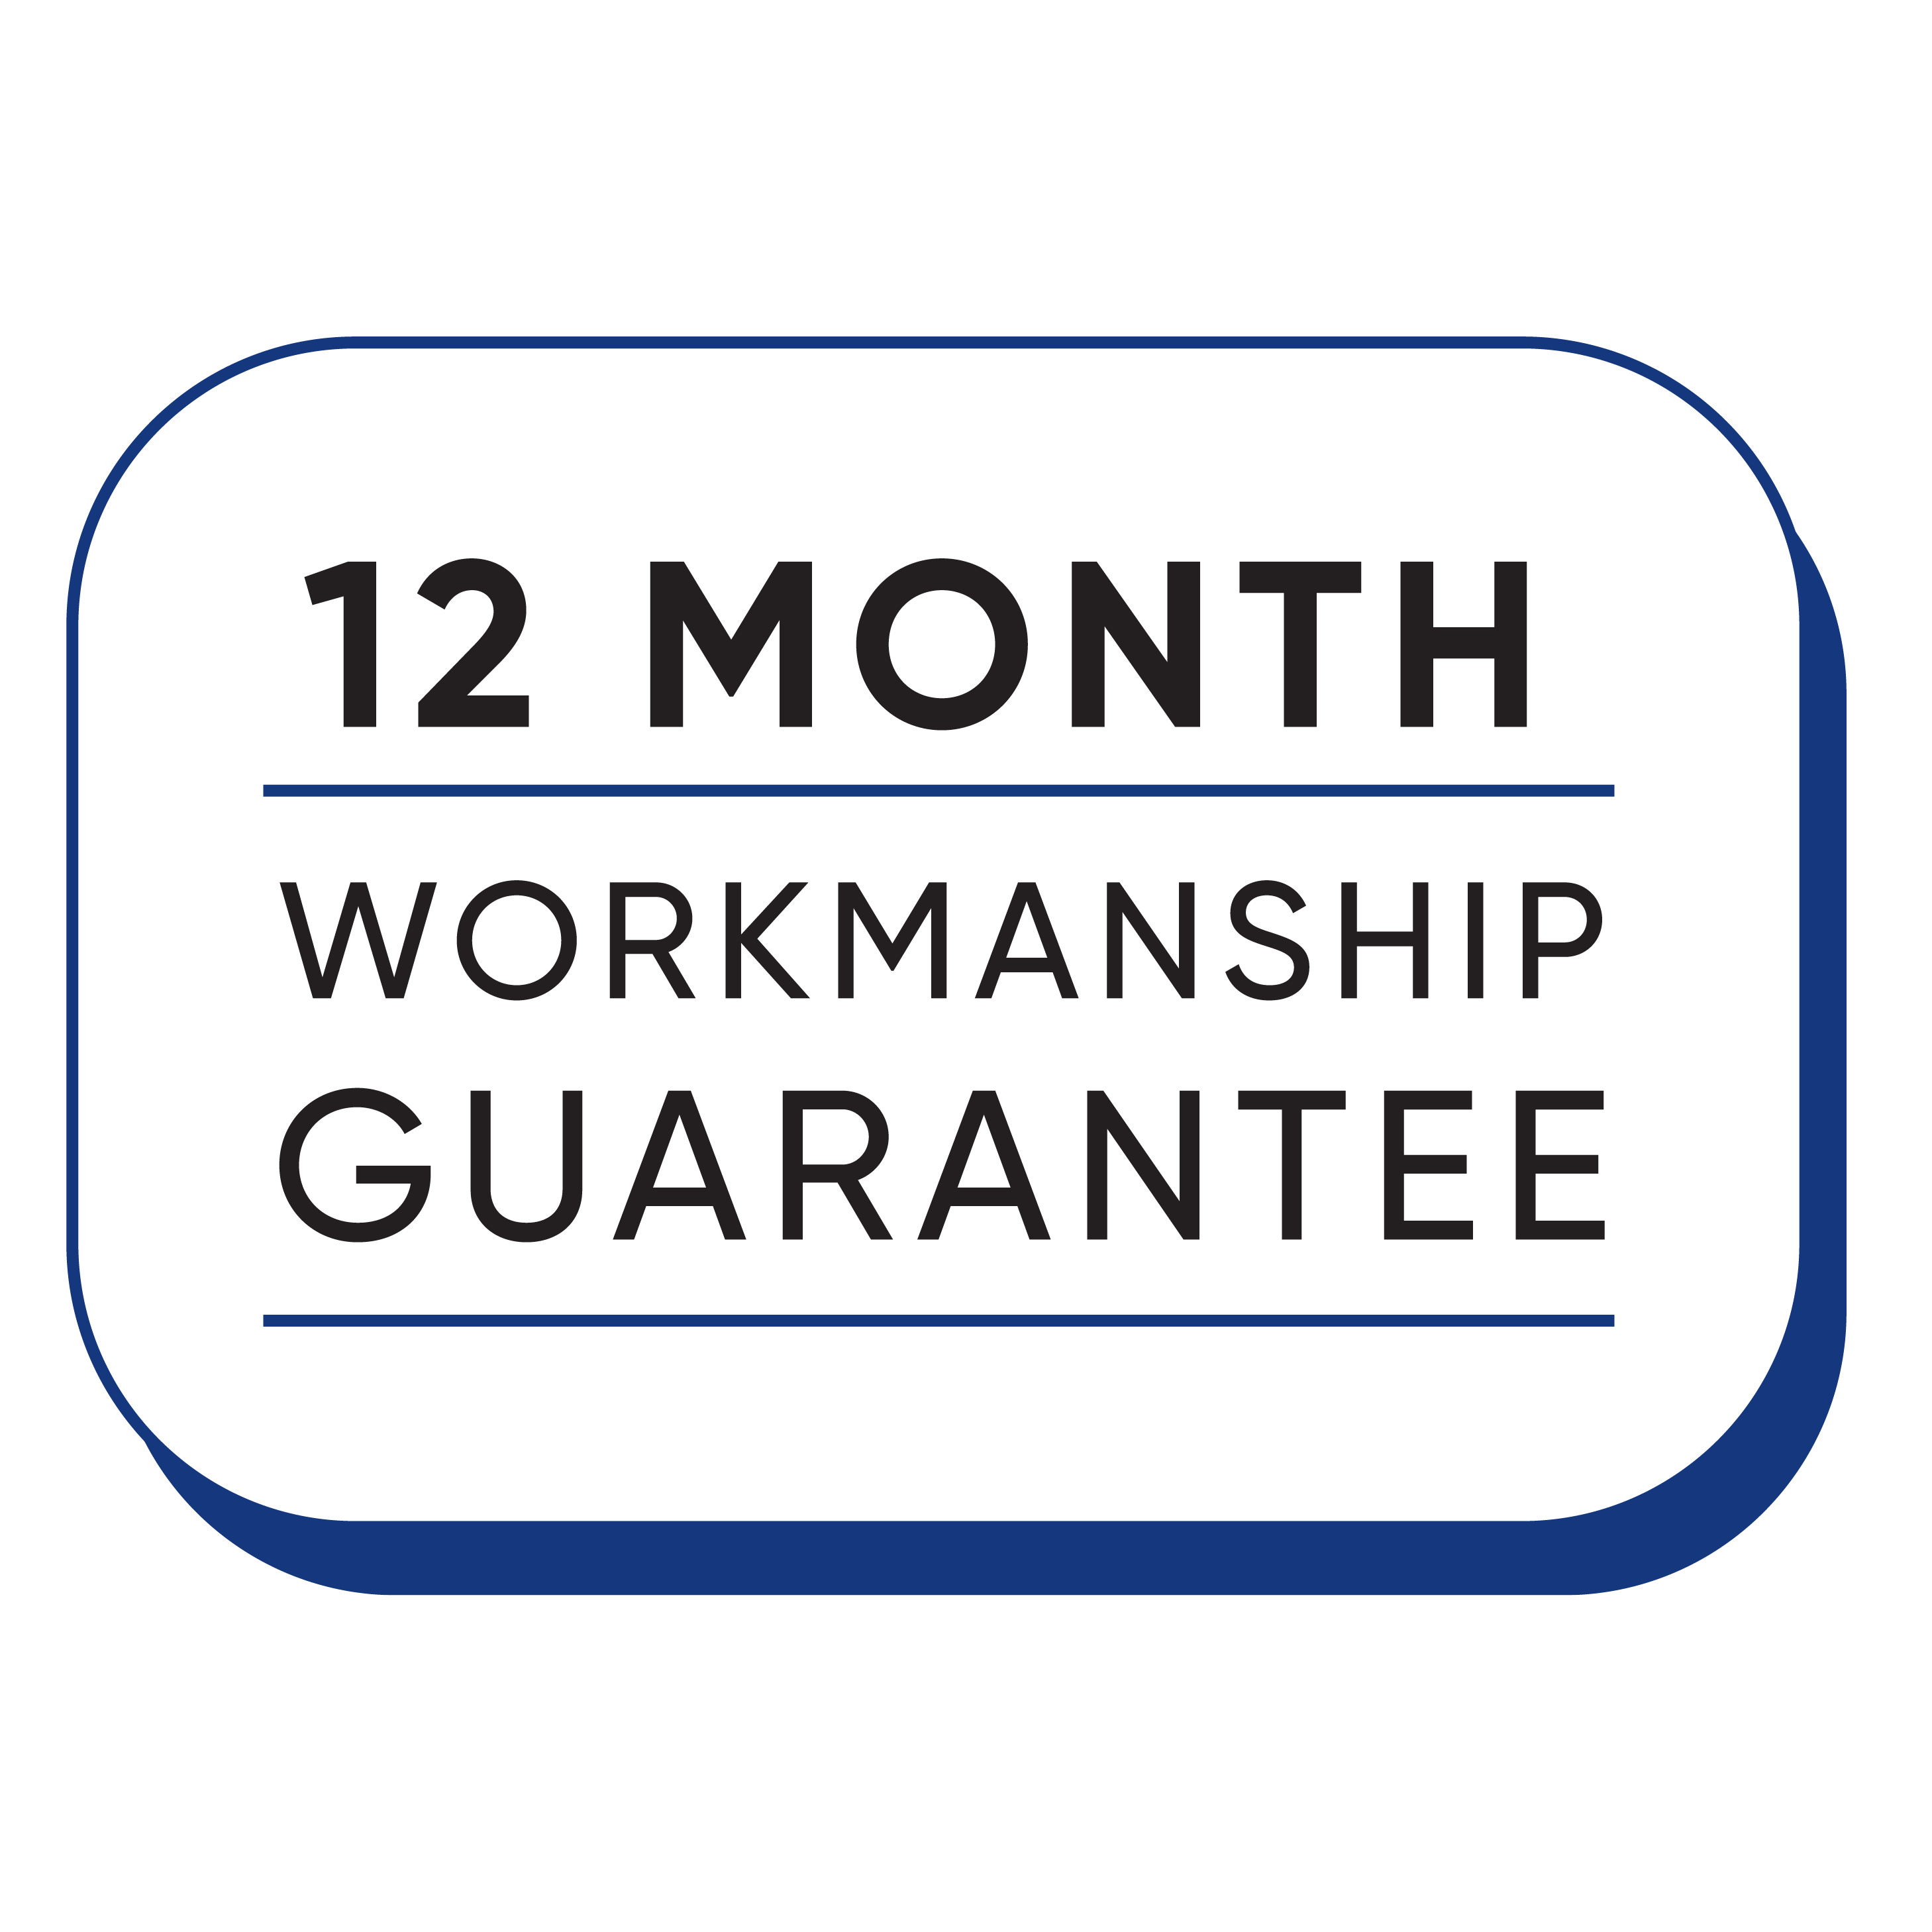 12 month workmanship guarantee